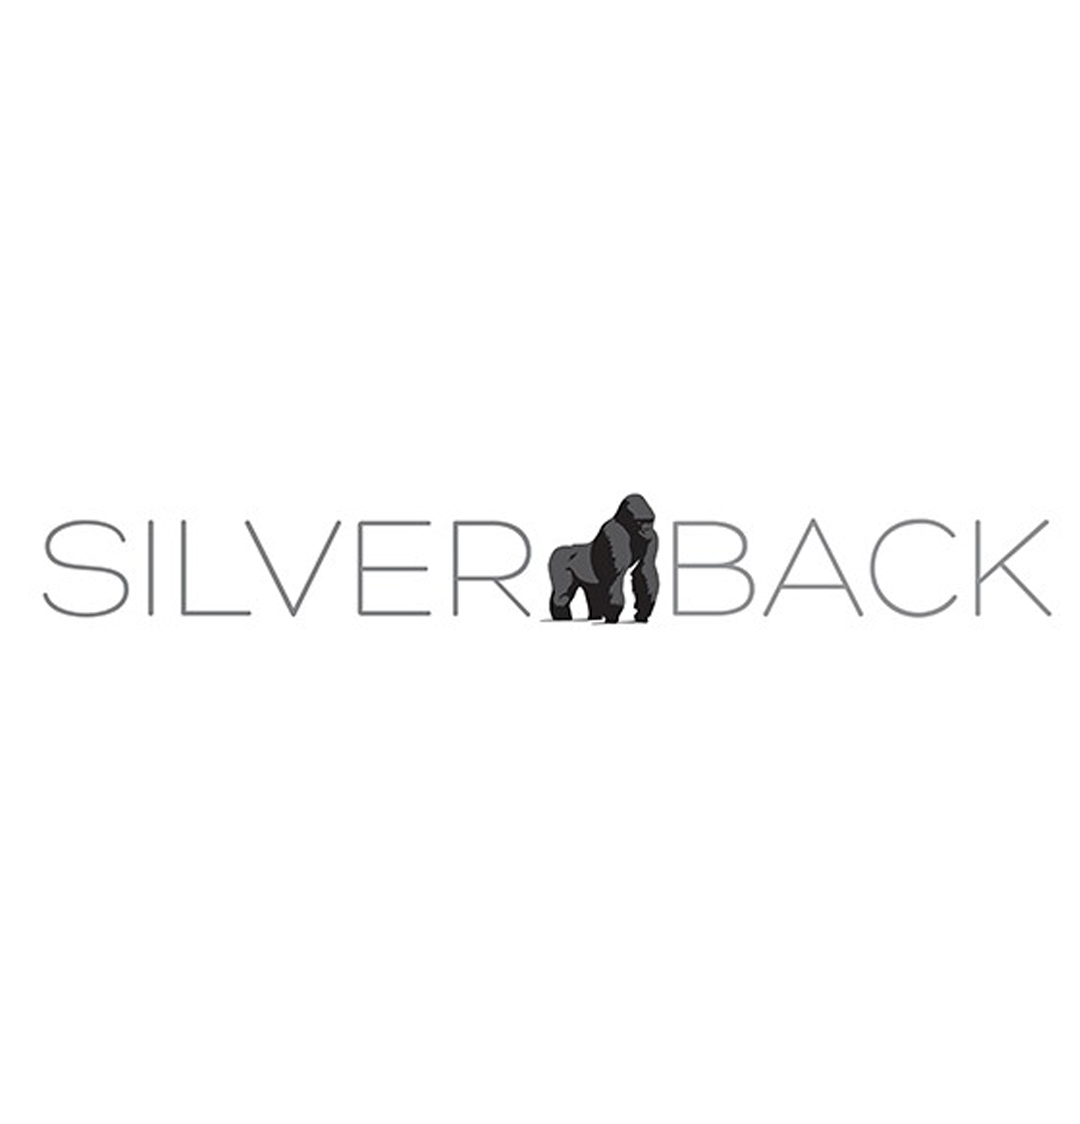 Silverback Films logo